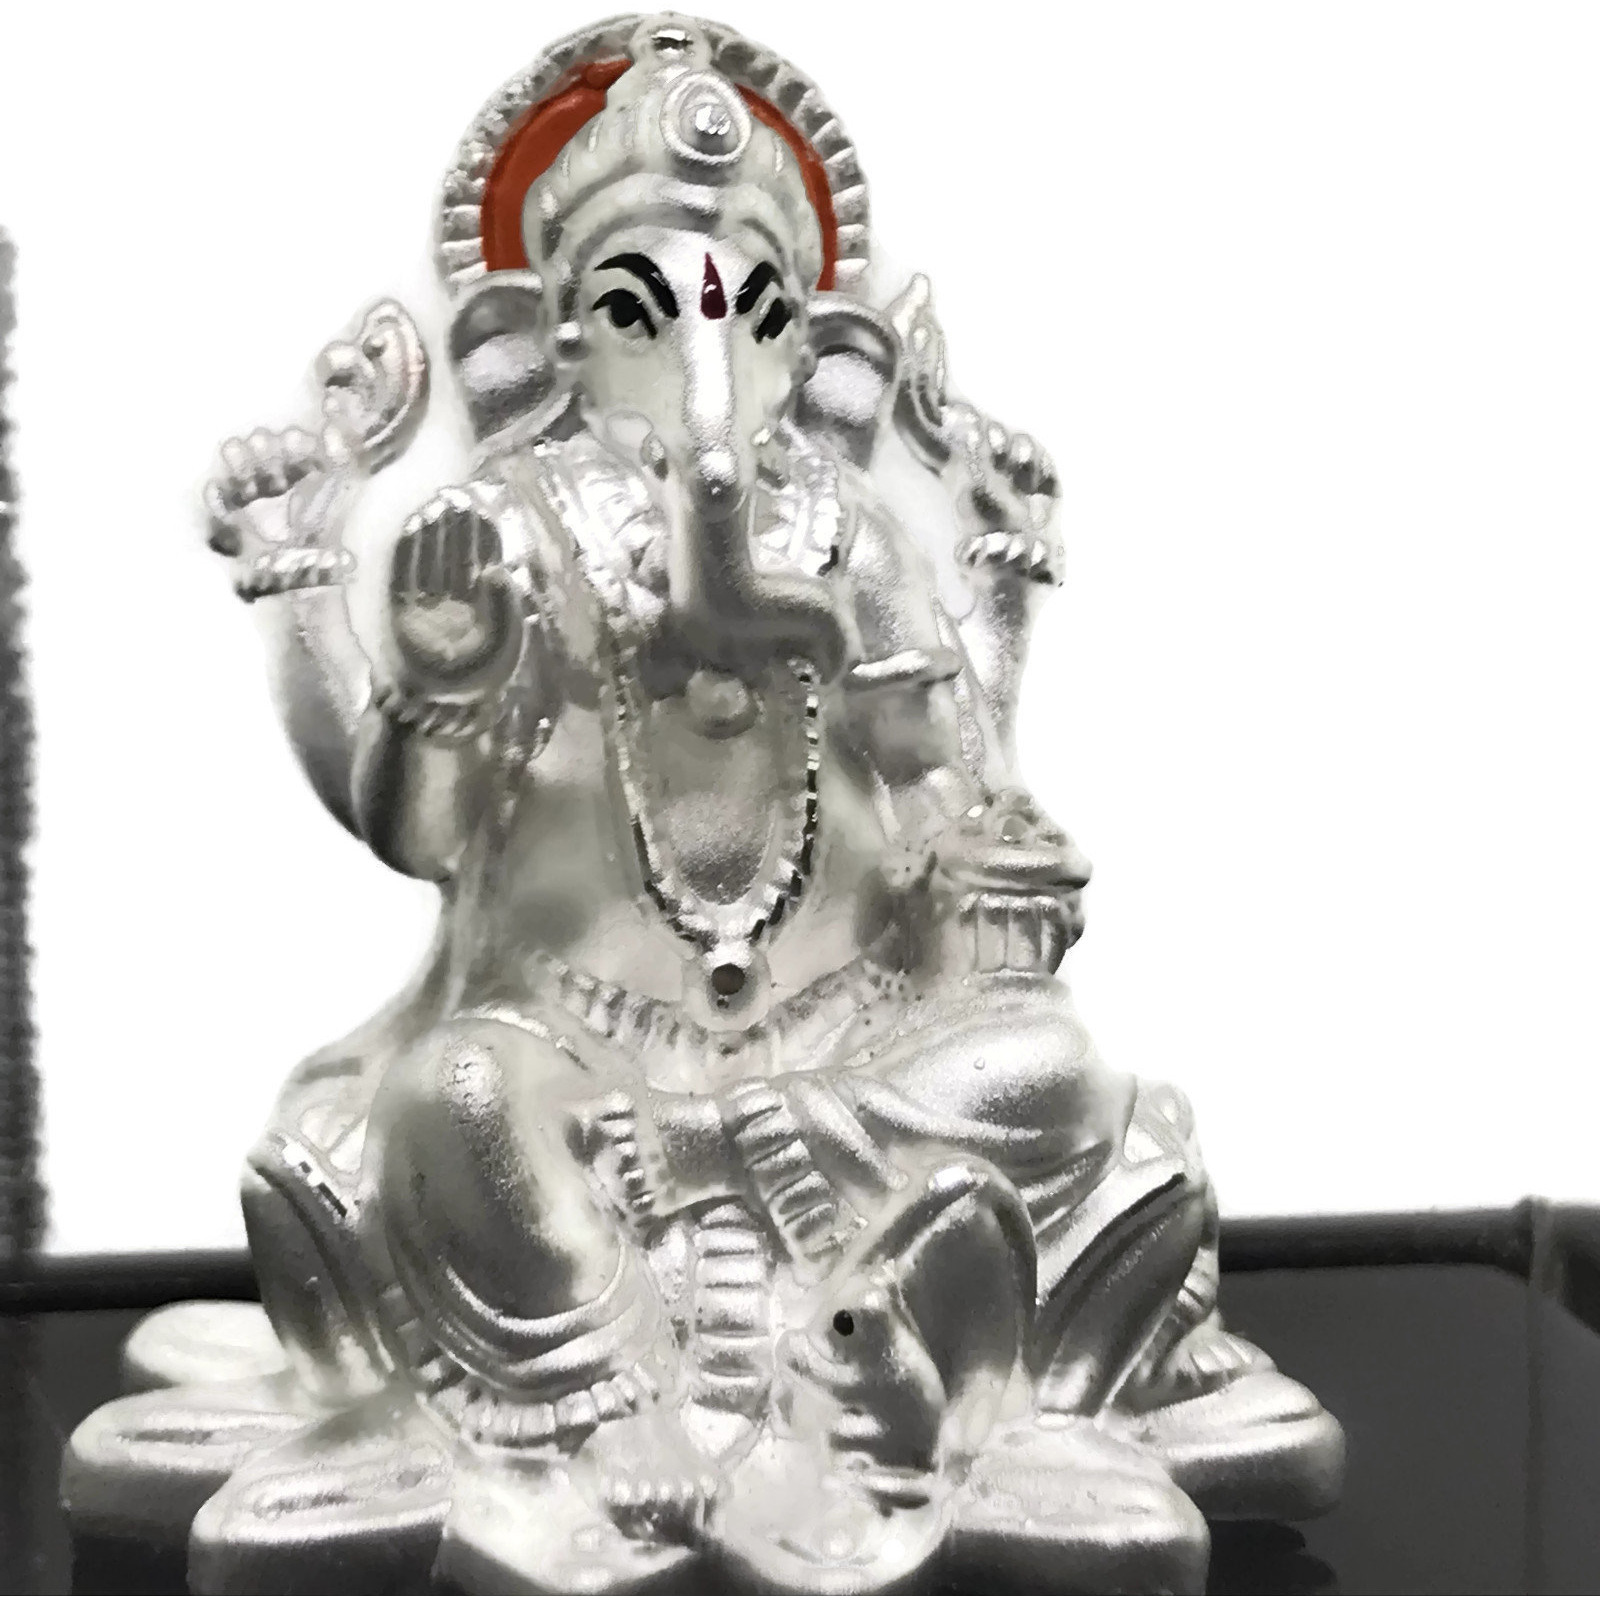 999 Pure Silver Ganesh Idol/Statue / Murti (Figurine# 11) (Shipping: EXPEDITED SHIPPING (2-3 DAYS)+$12.99)